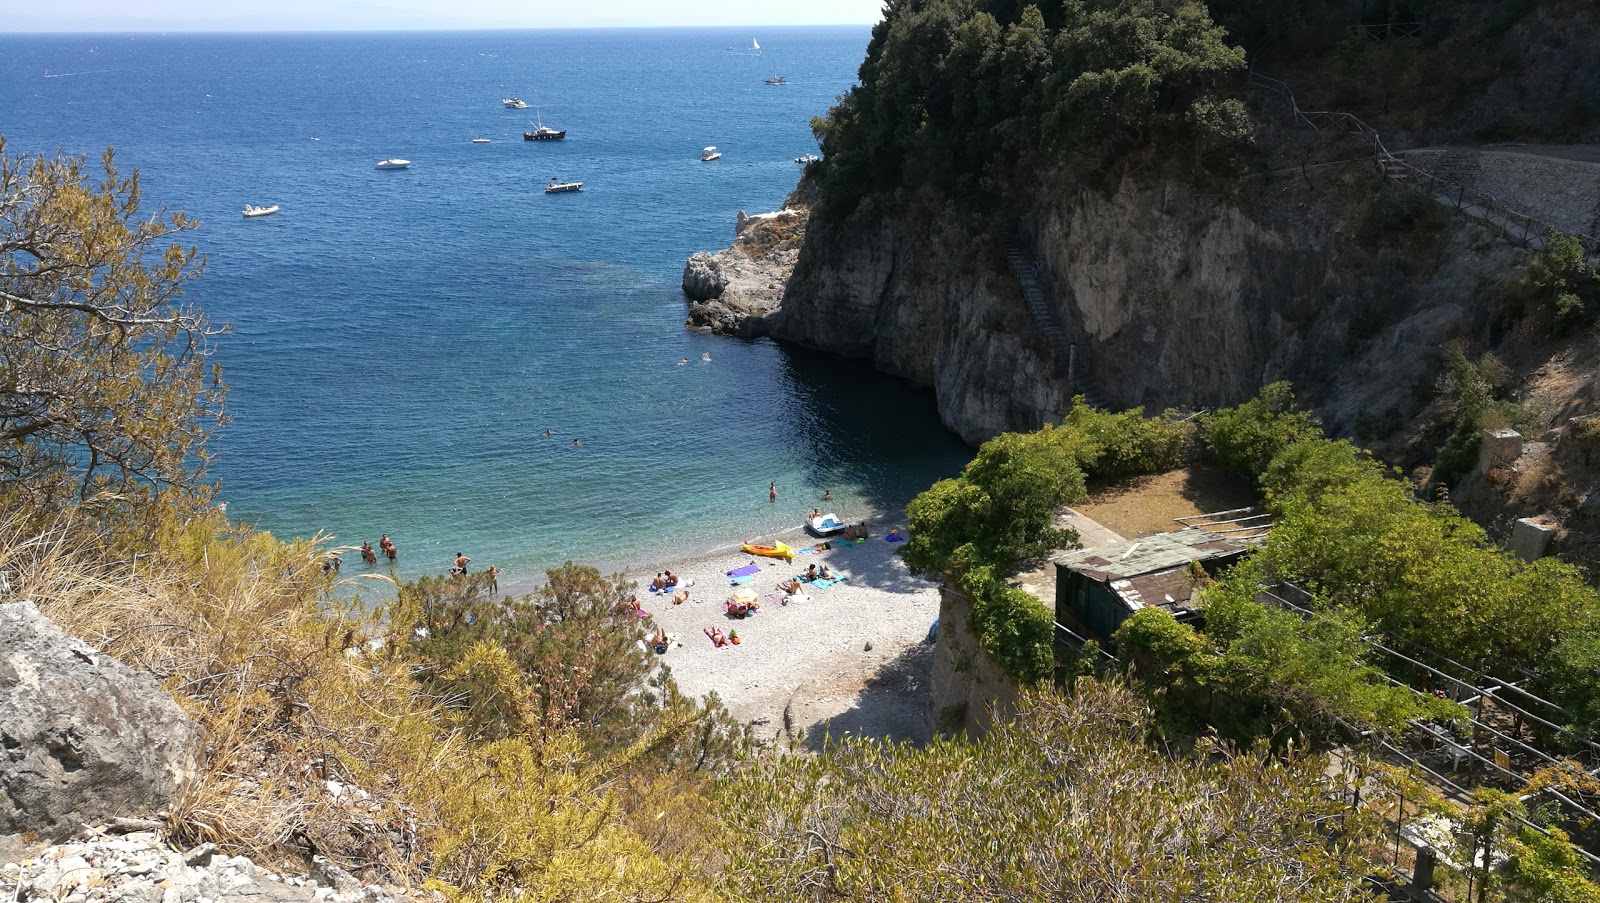 Spiaggia di Sovrano'in fotoğrafı vahşi alan